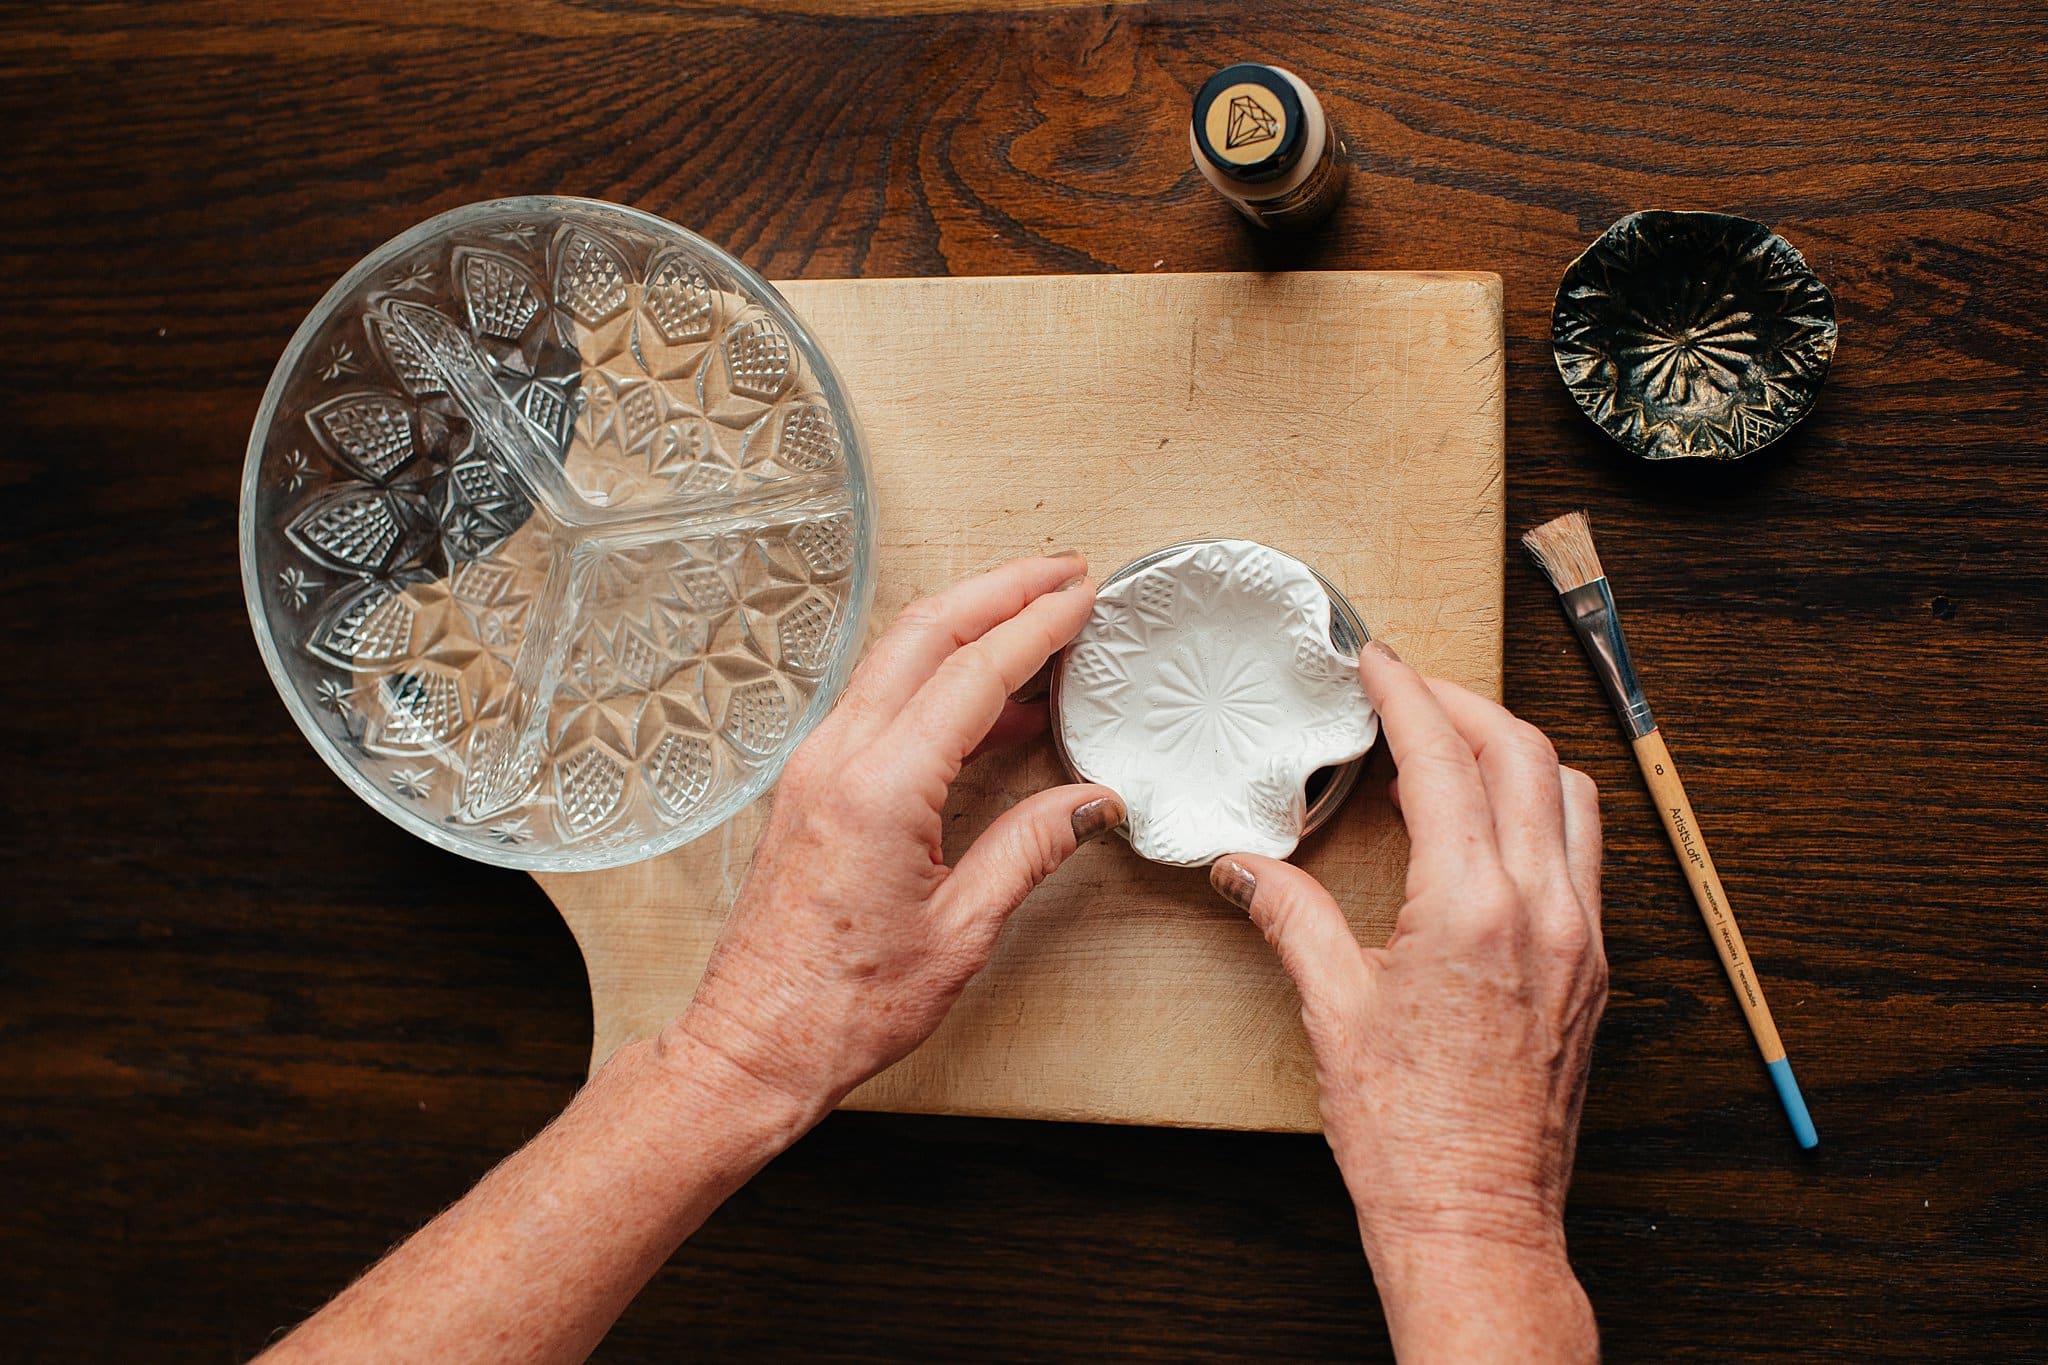 Make a DIY Custom Jewelry Dish from Polymer Clay